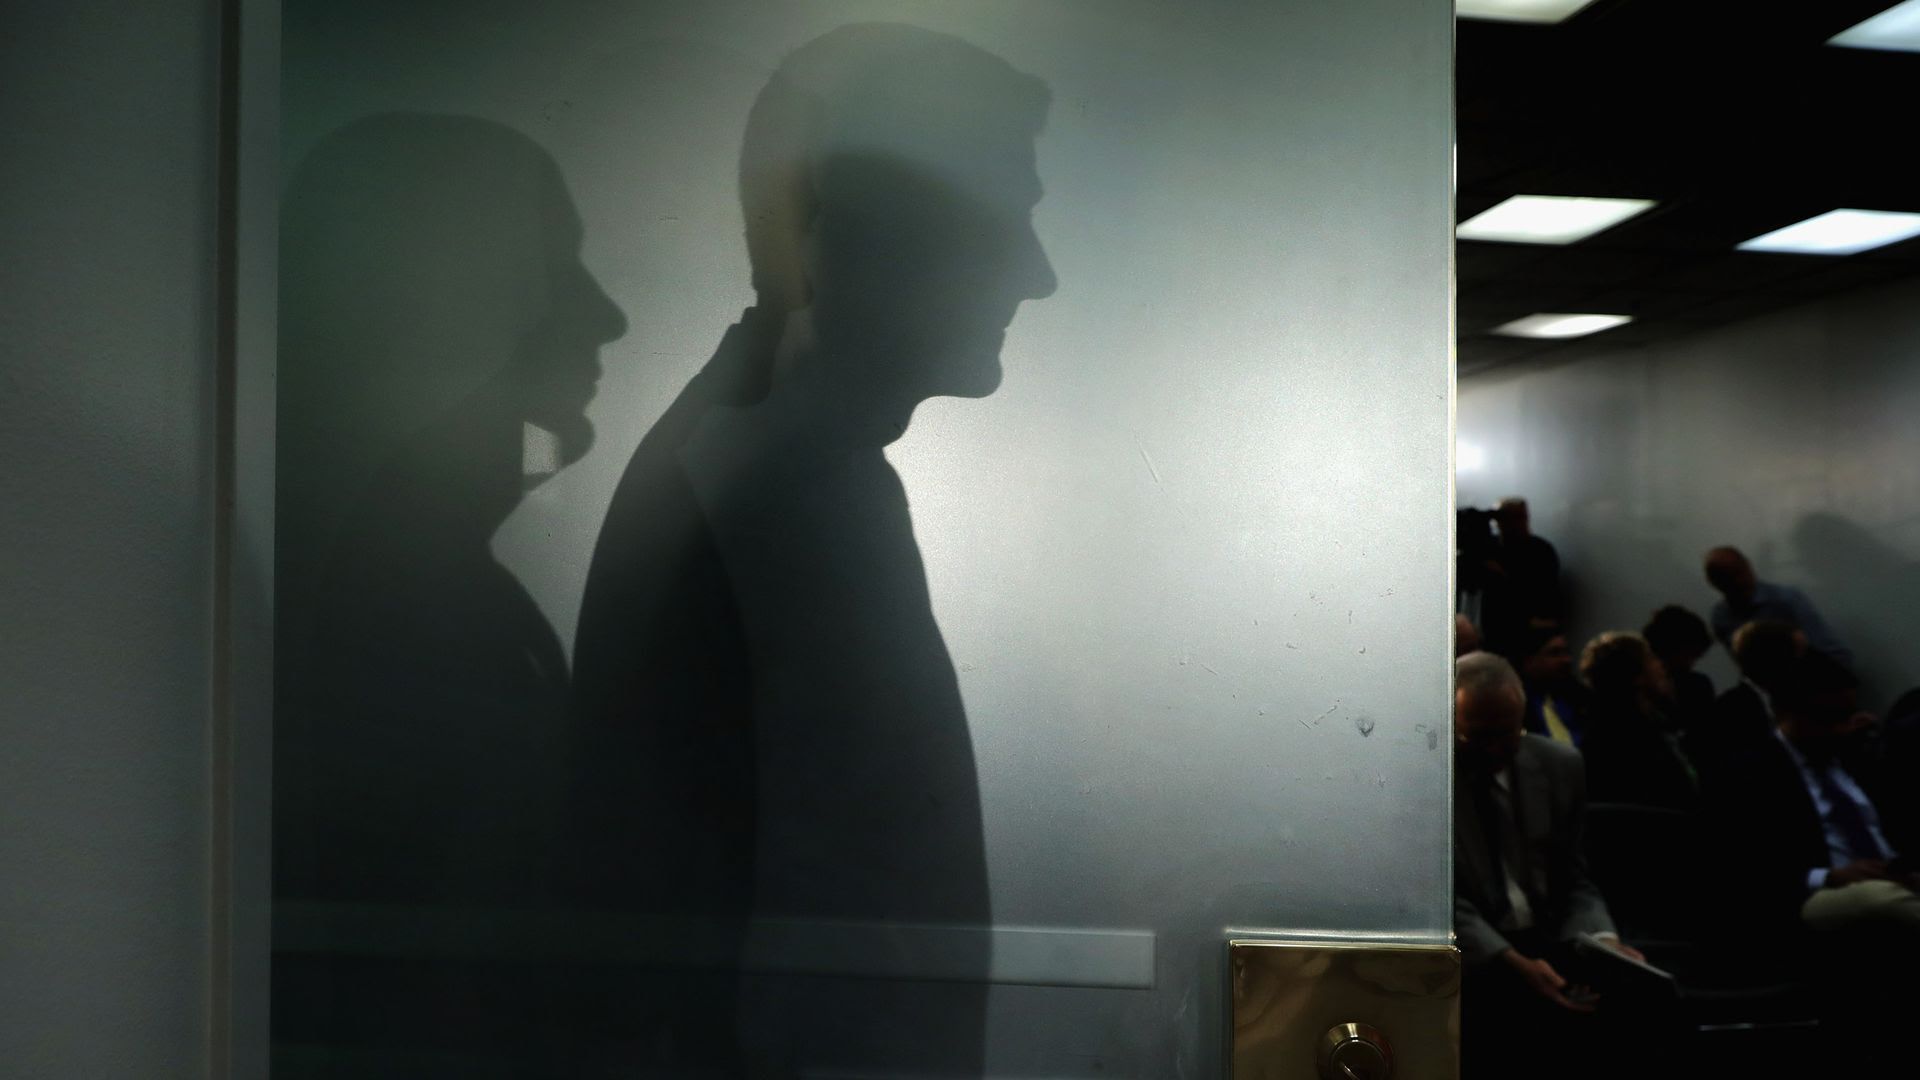 House Speaker Paul Ryan casts his shadow on a glass door. 